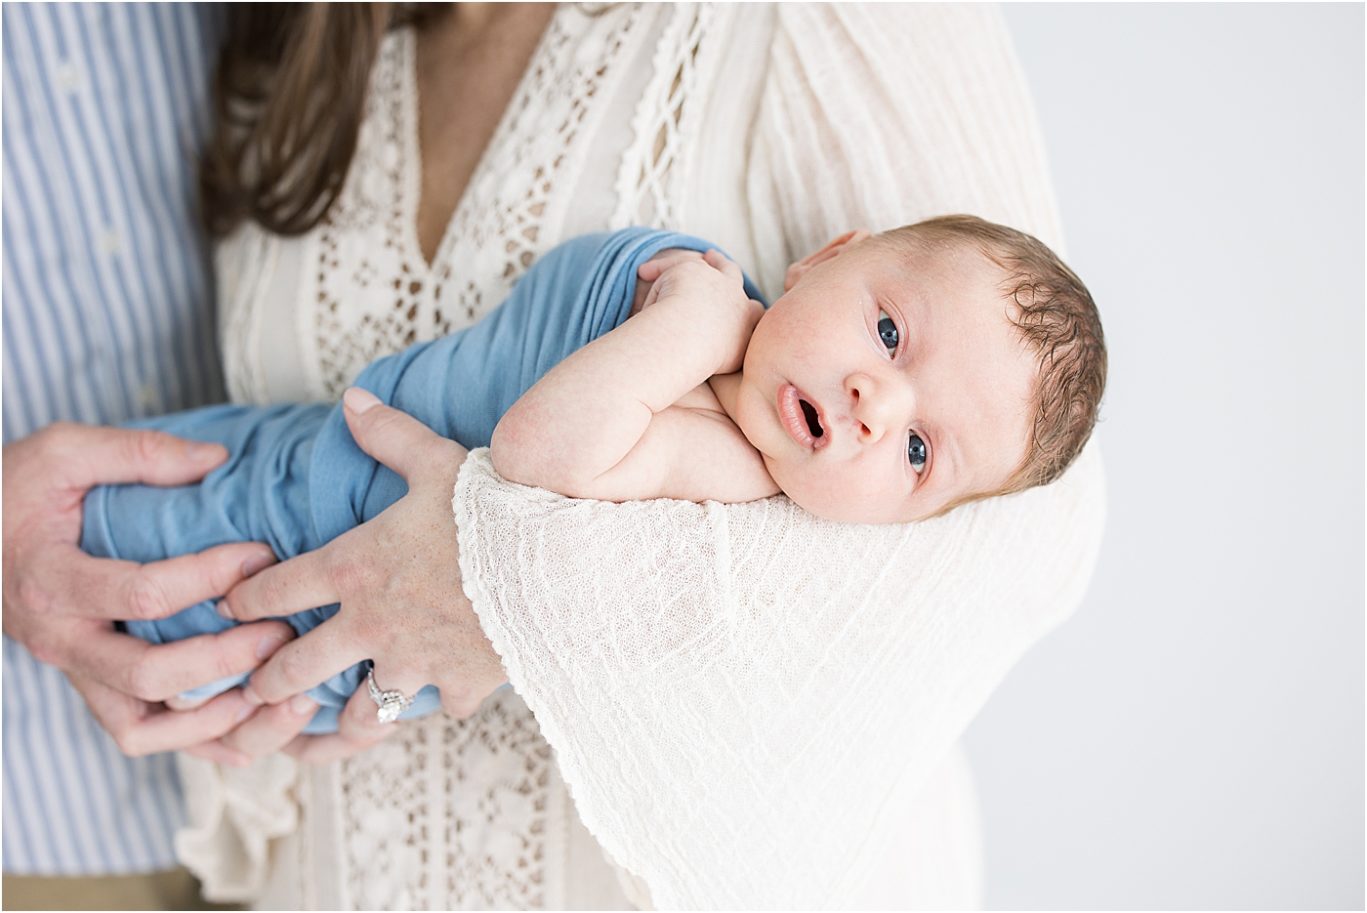 Baby boy awake for newborn photos in studio in Lindsay Konopa Photography.